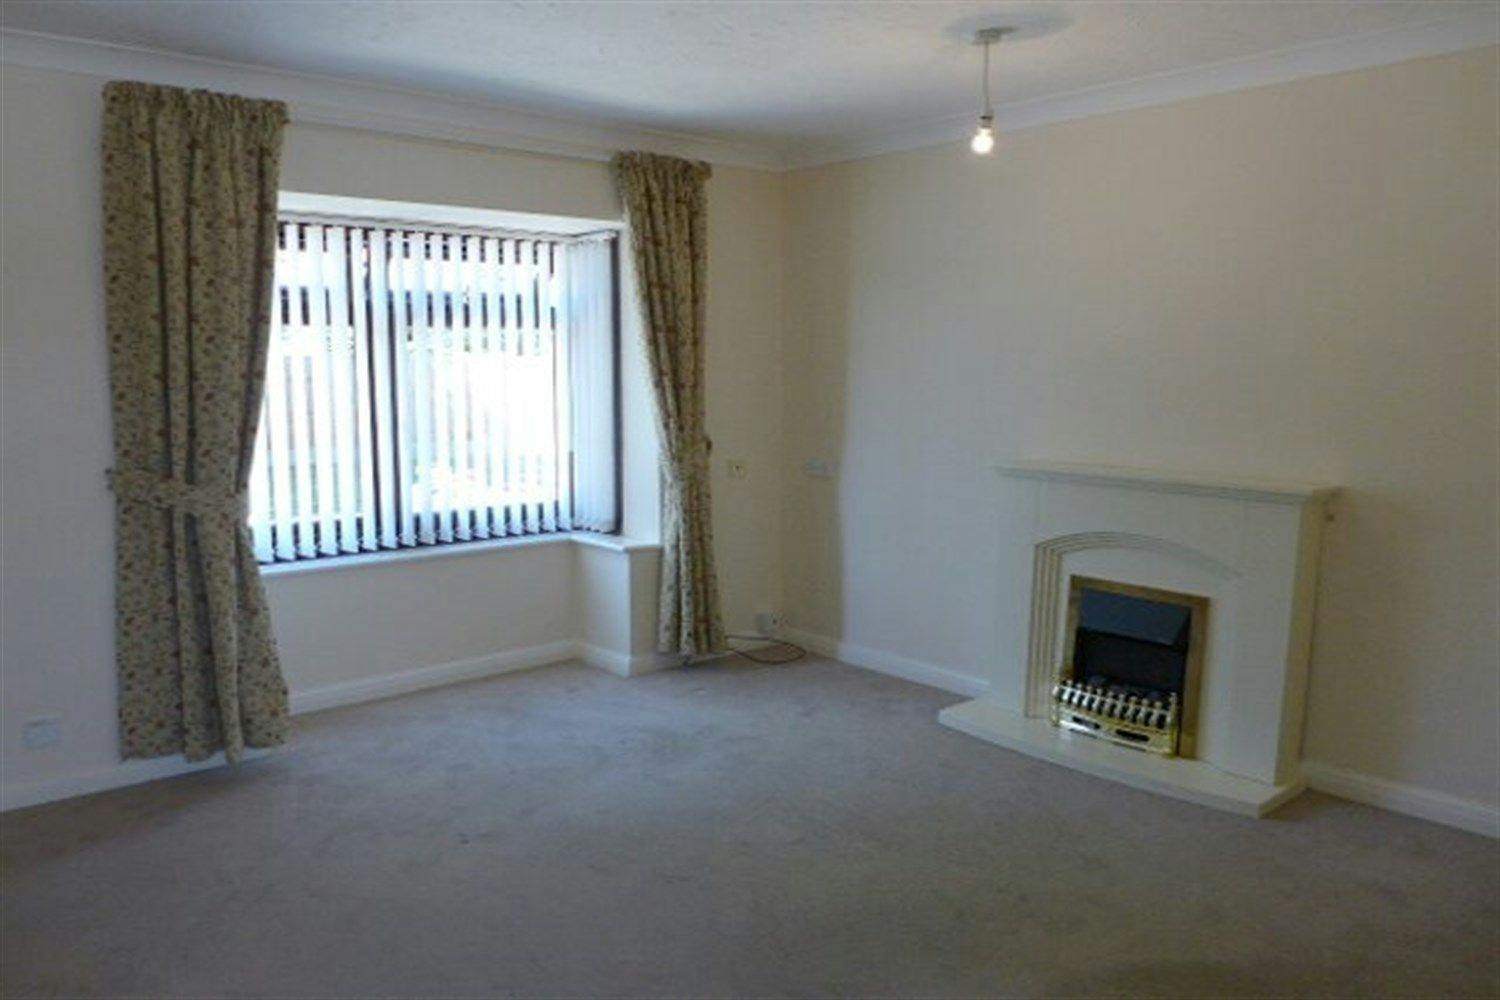 Living Room at Oakhaven Retirement Development in Harwich, Tendring